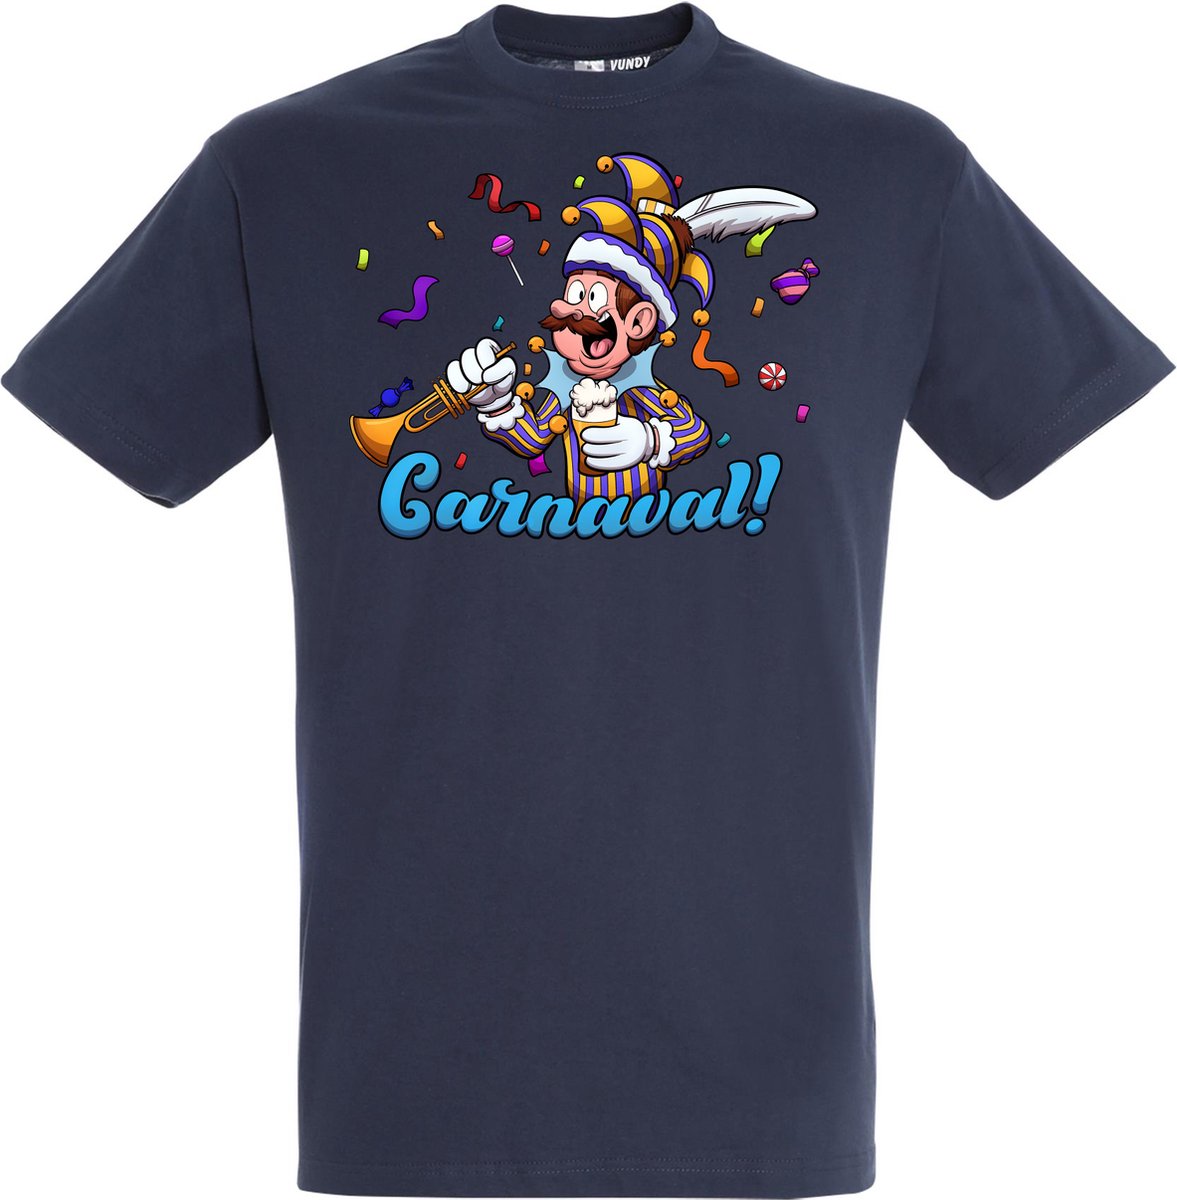 T-shirt kinderen Carnavalluh | Carnaval | Carnavalskleding Kinderen Baby | Navy | maat 68